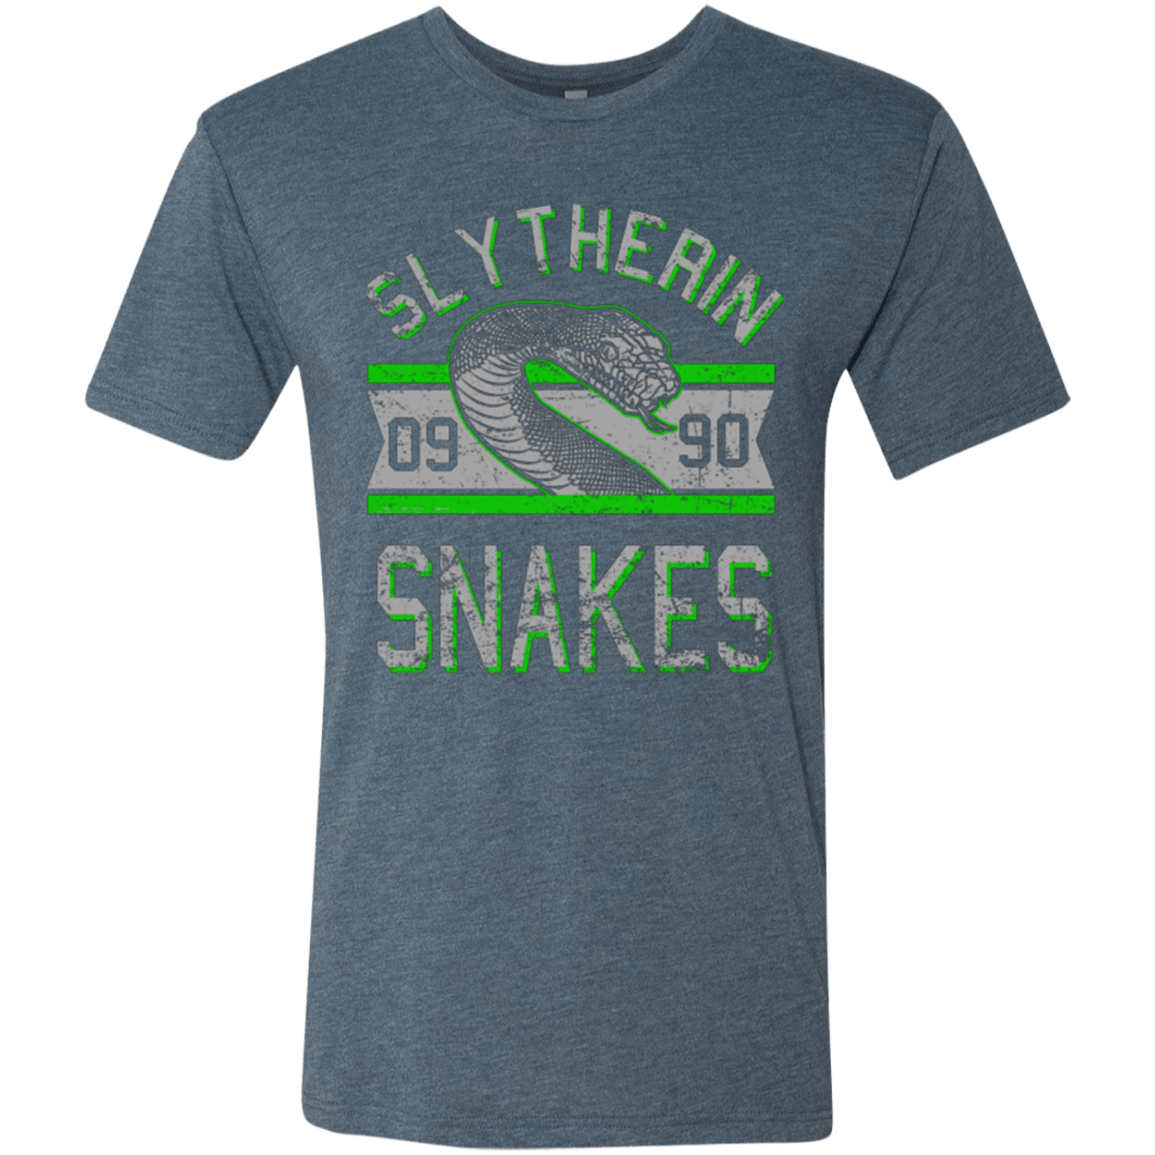 T-Shirts Indigo / Small Snakes Men's Triblend T-Shirt